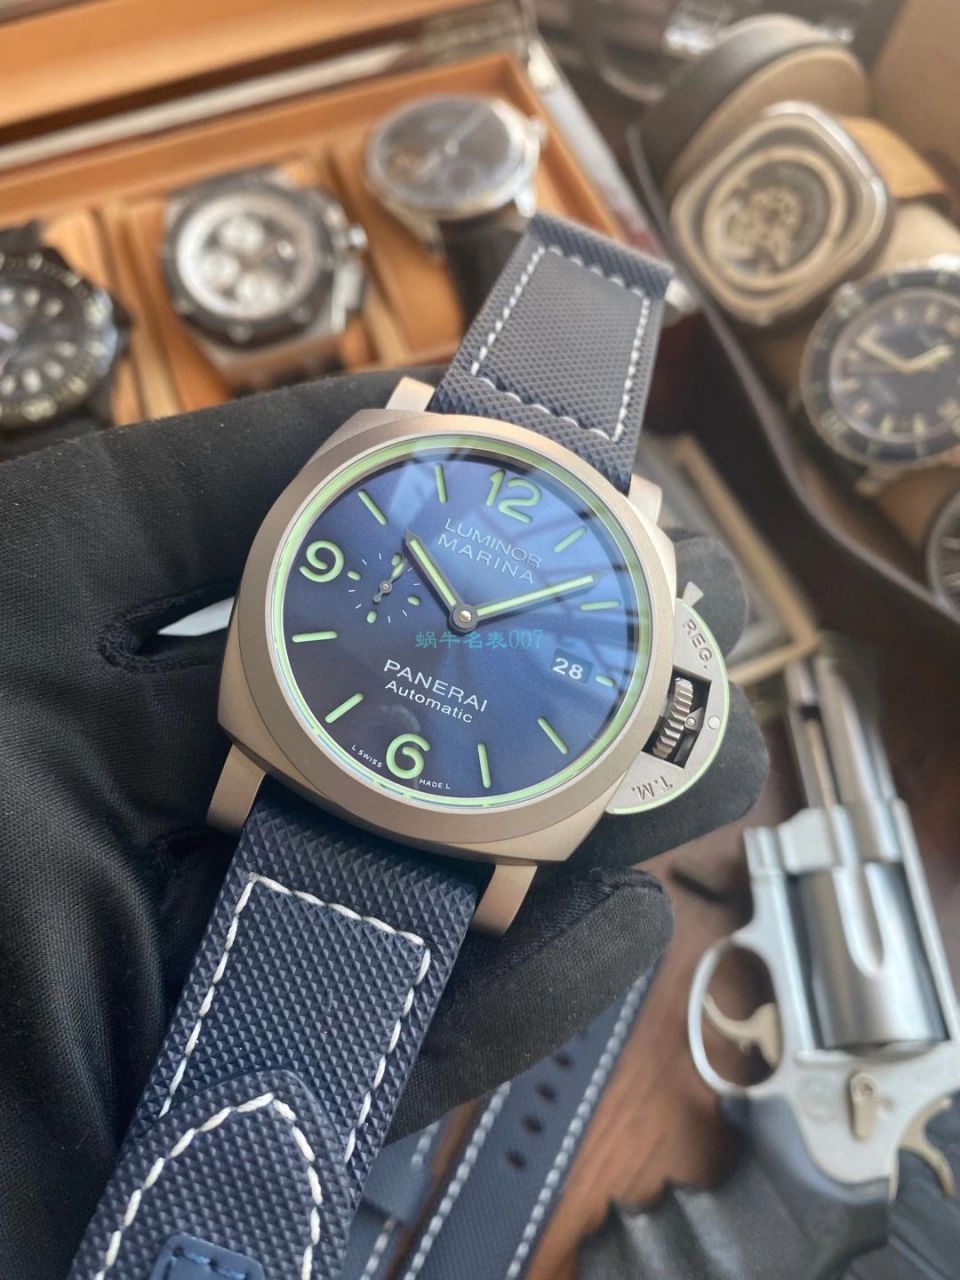 VS厂沛纳海LUMINOR一比一顶级复刻手表PAM01117腕表 